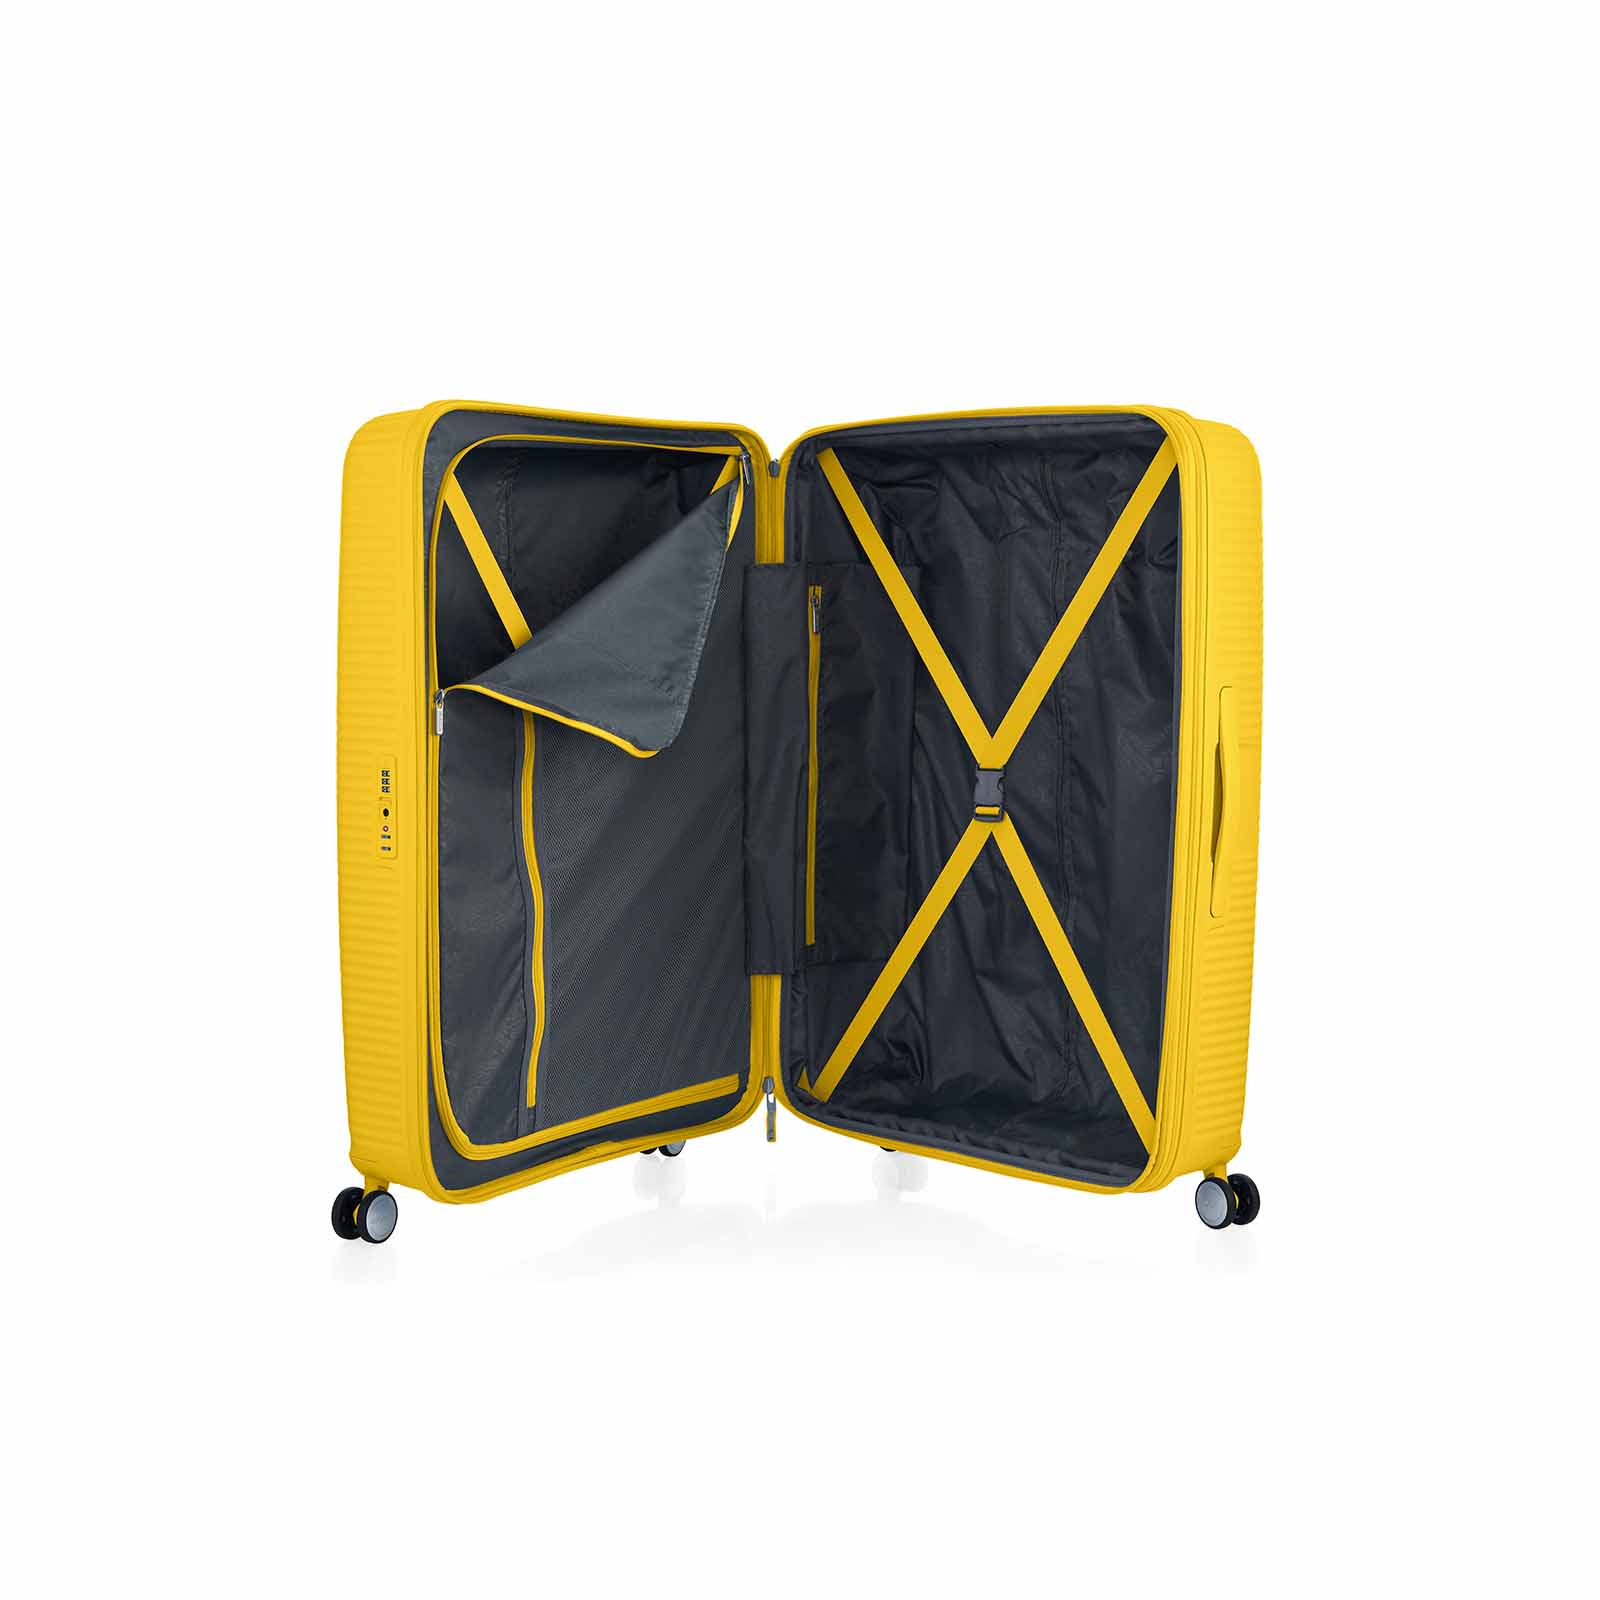 American-Tourister-Curio-2-80cm-Suitcase-Golden-Yellow-Open